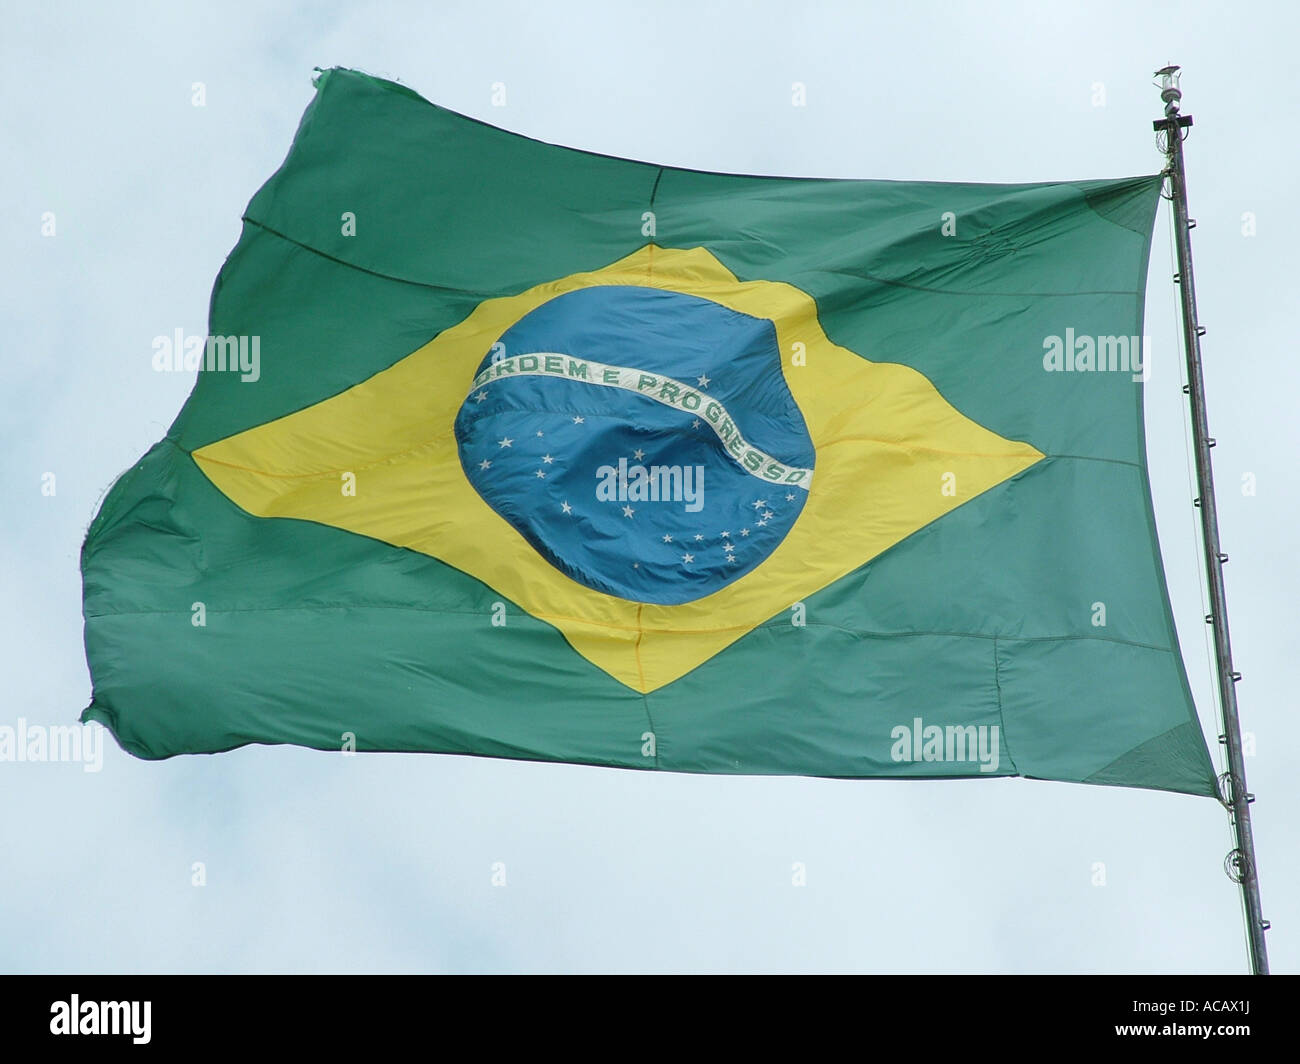 Waving Brasilian national flag 'ordem e progesso' Stock Photo